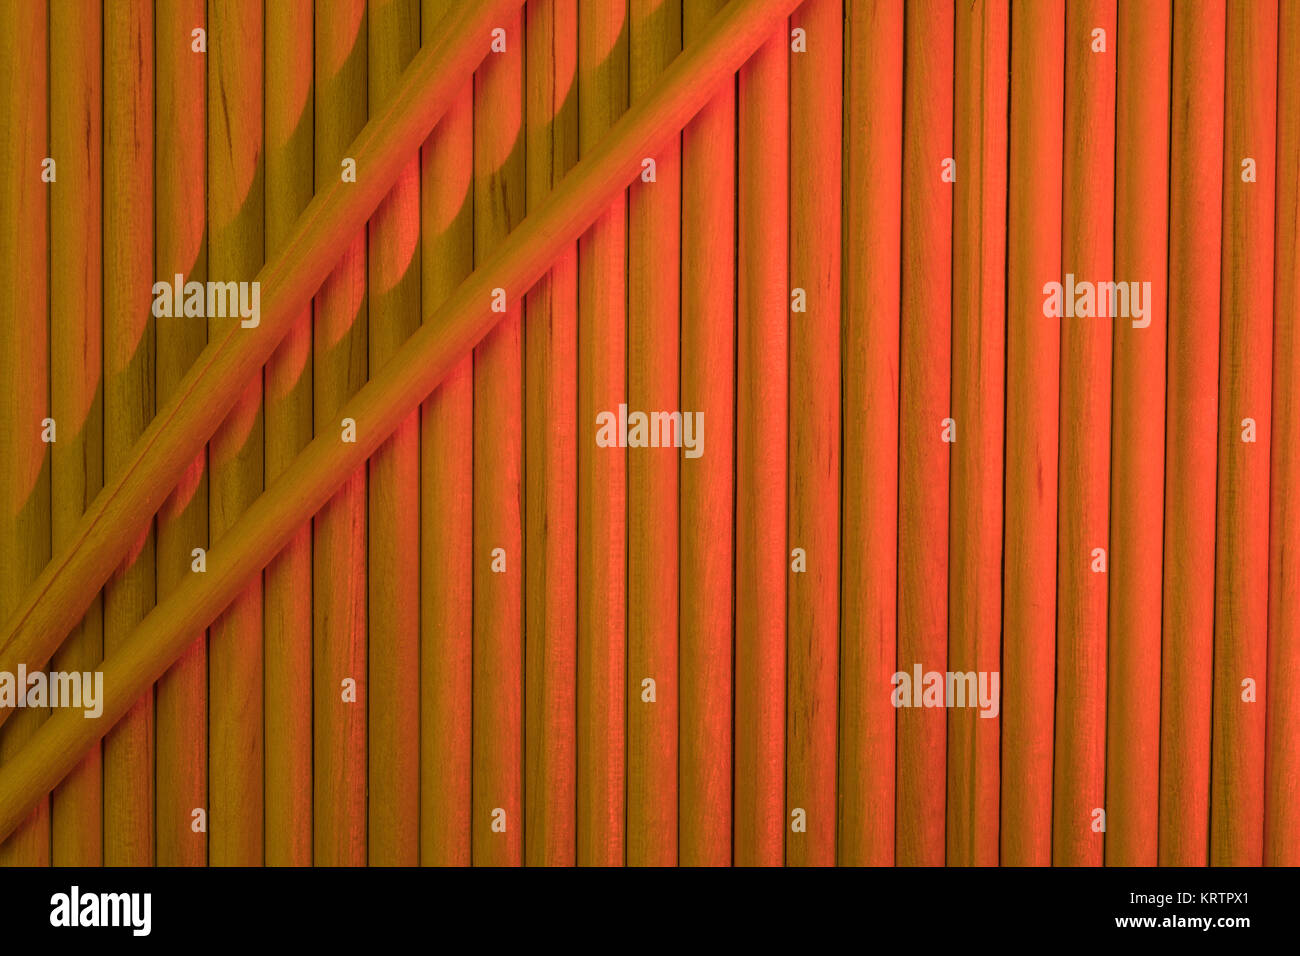 Close-up of wooden lollipop sticks. Stock Photo